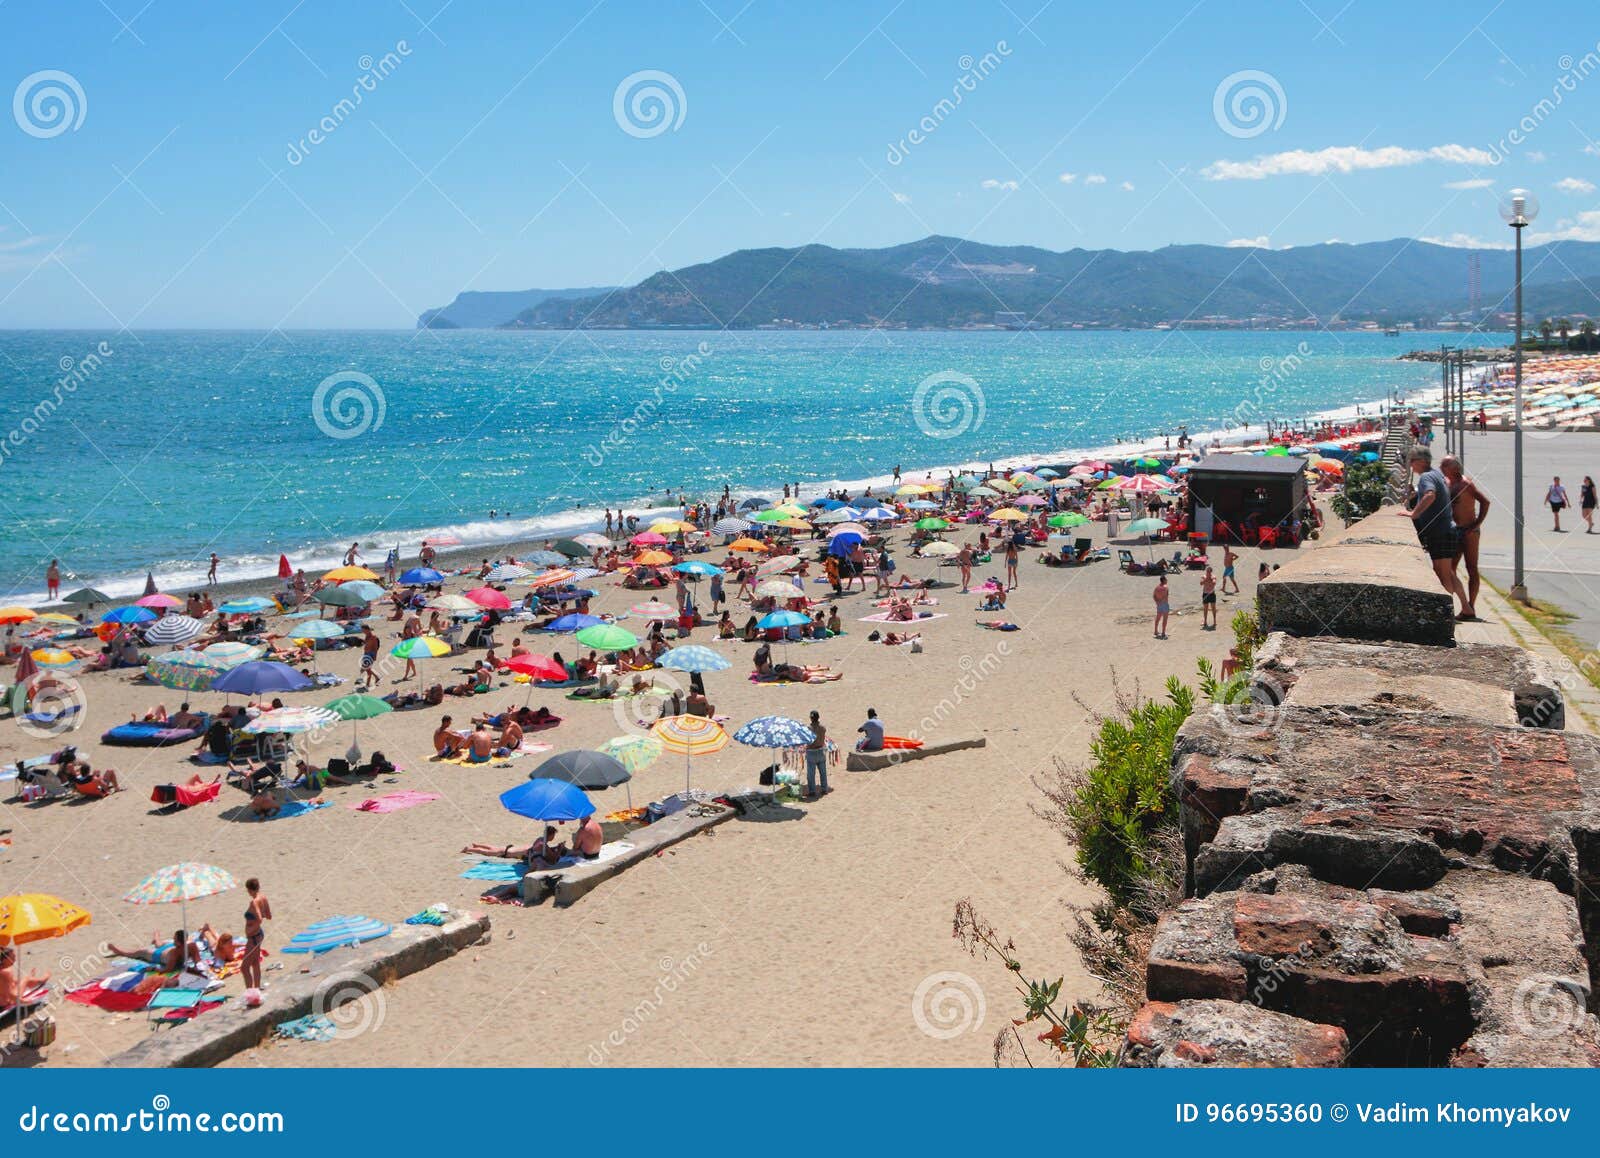 City Beach in Savona, Italy Editorial Image - Image of beach, landscape:  96695360